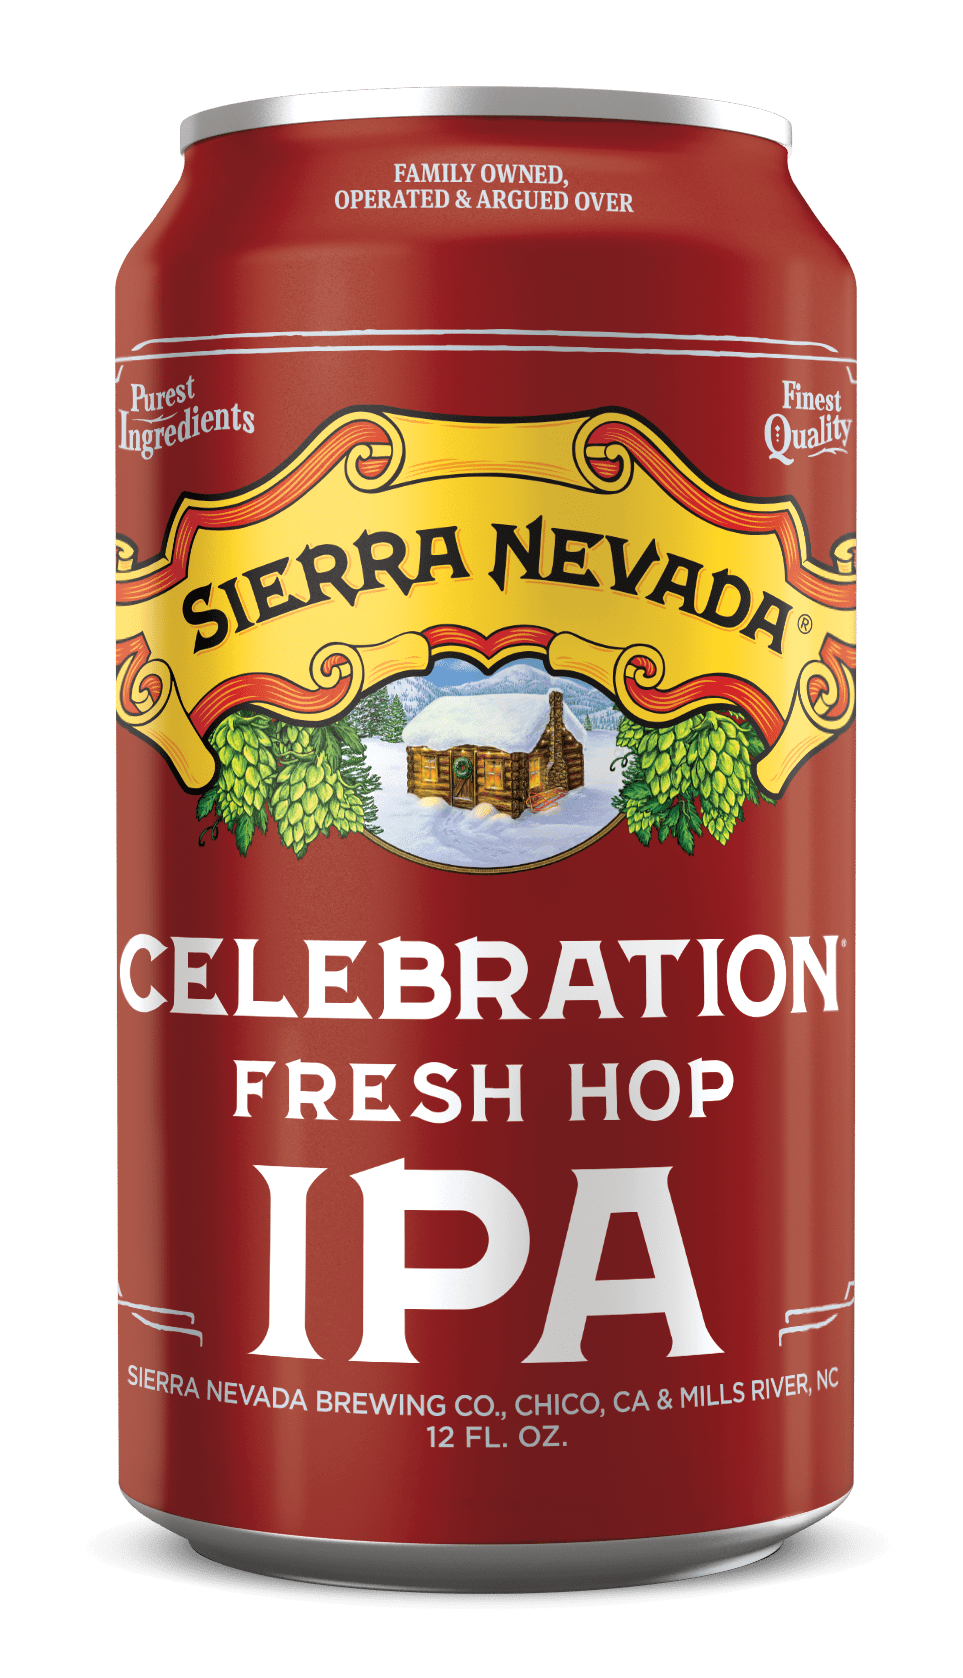 Celebration Fresh Hop IPA beer can